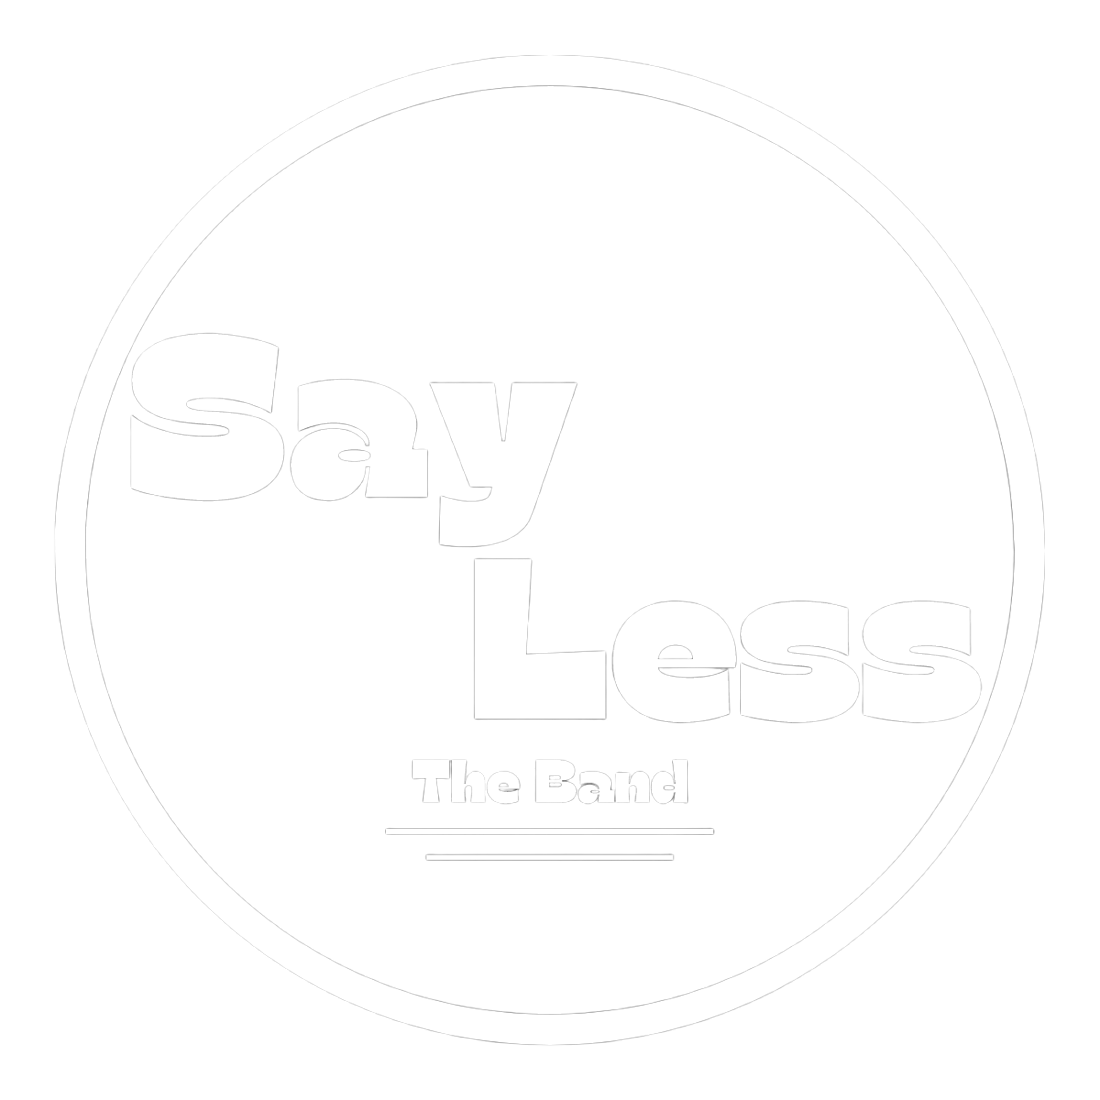 Say Less The Band